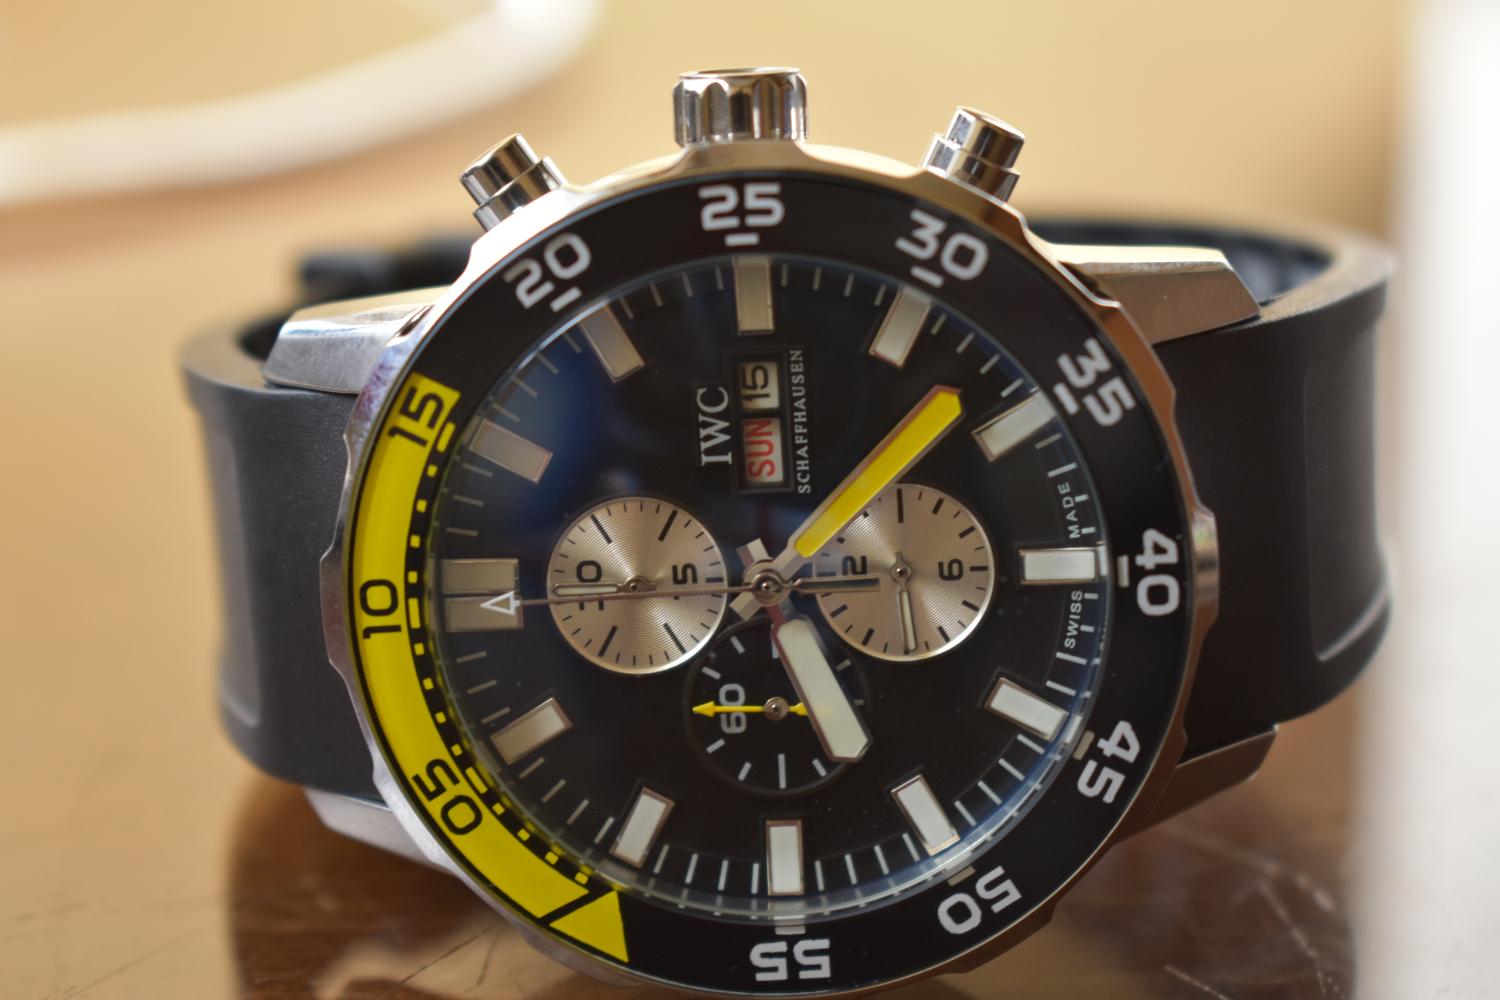 I W C Aqua timer Quartz Chronograph Day Date Men's Watch I W 376709 for sale in Nairobi,Kenya.